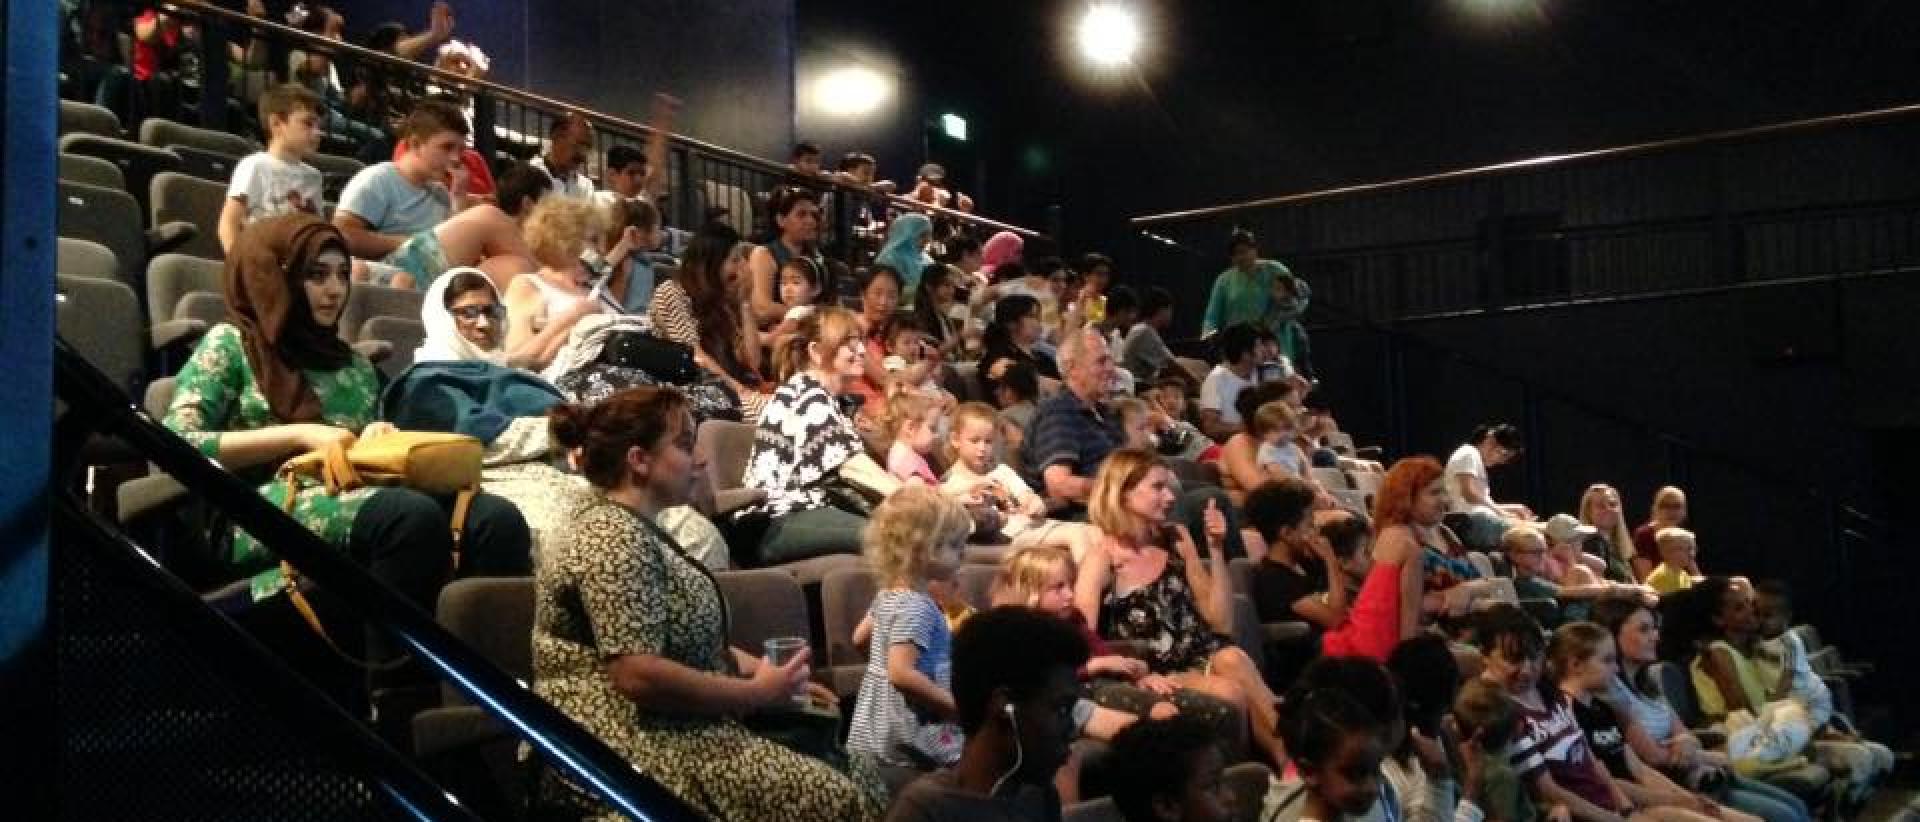 audience members at the cinema